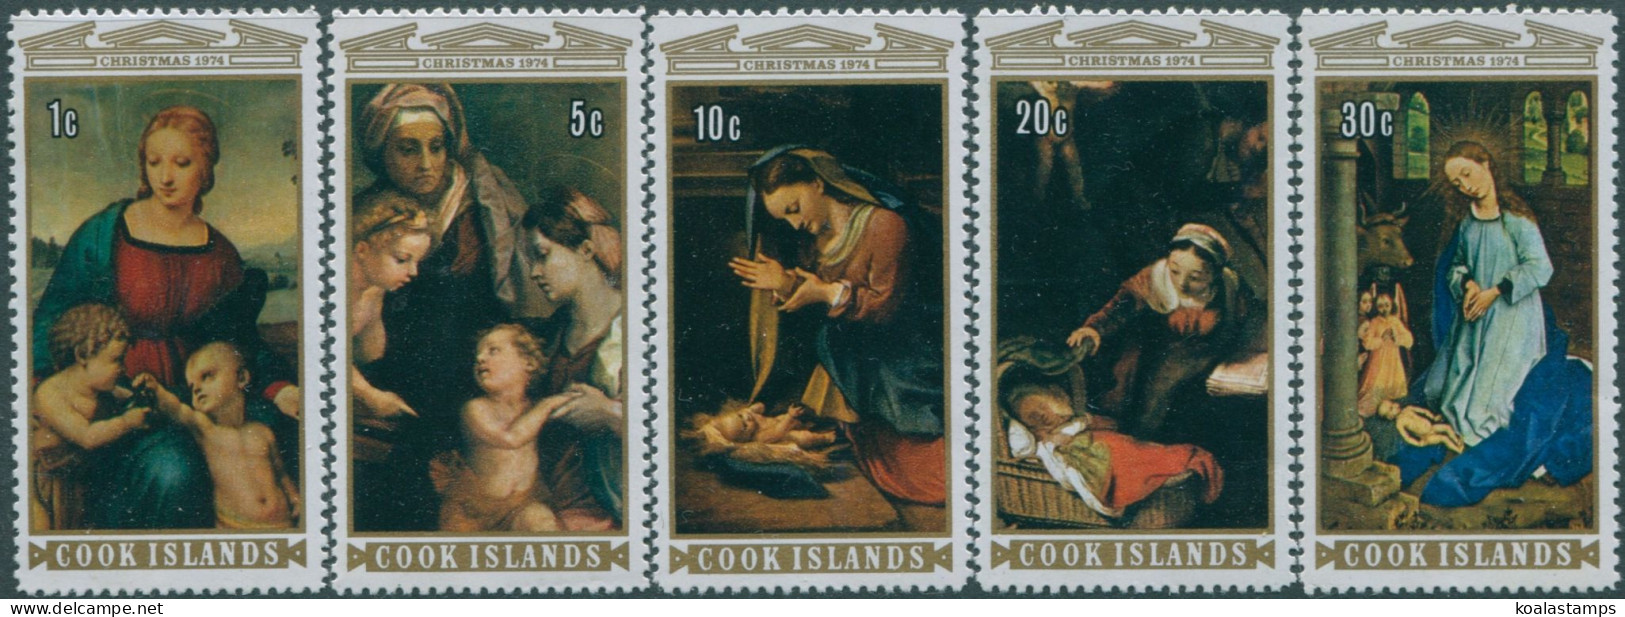 Cook Islands 1974 SG500-504 Christmas Set MNH - Cook